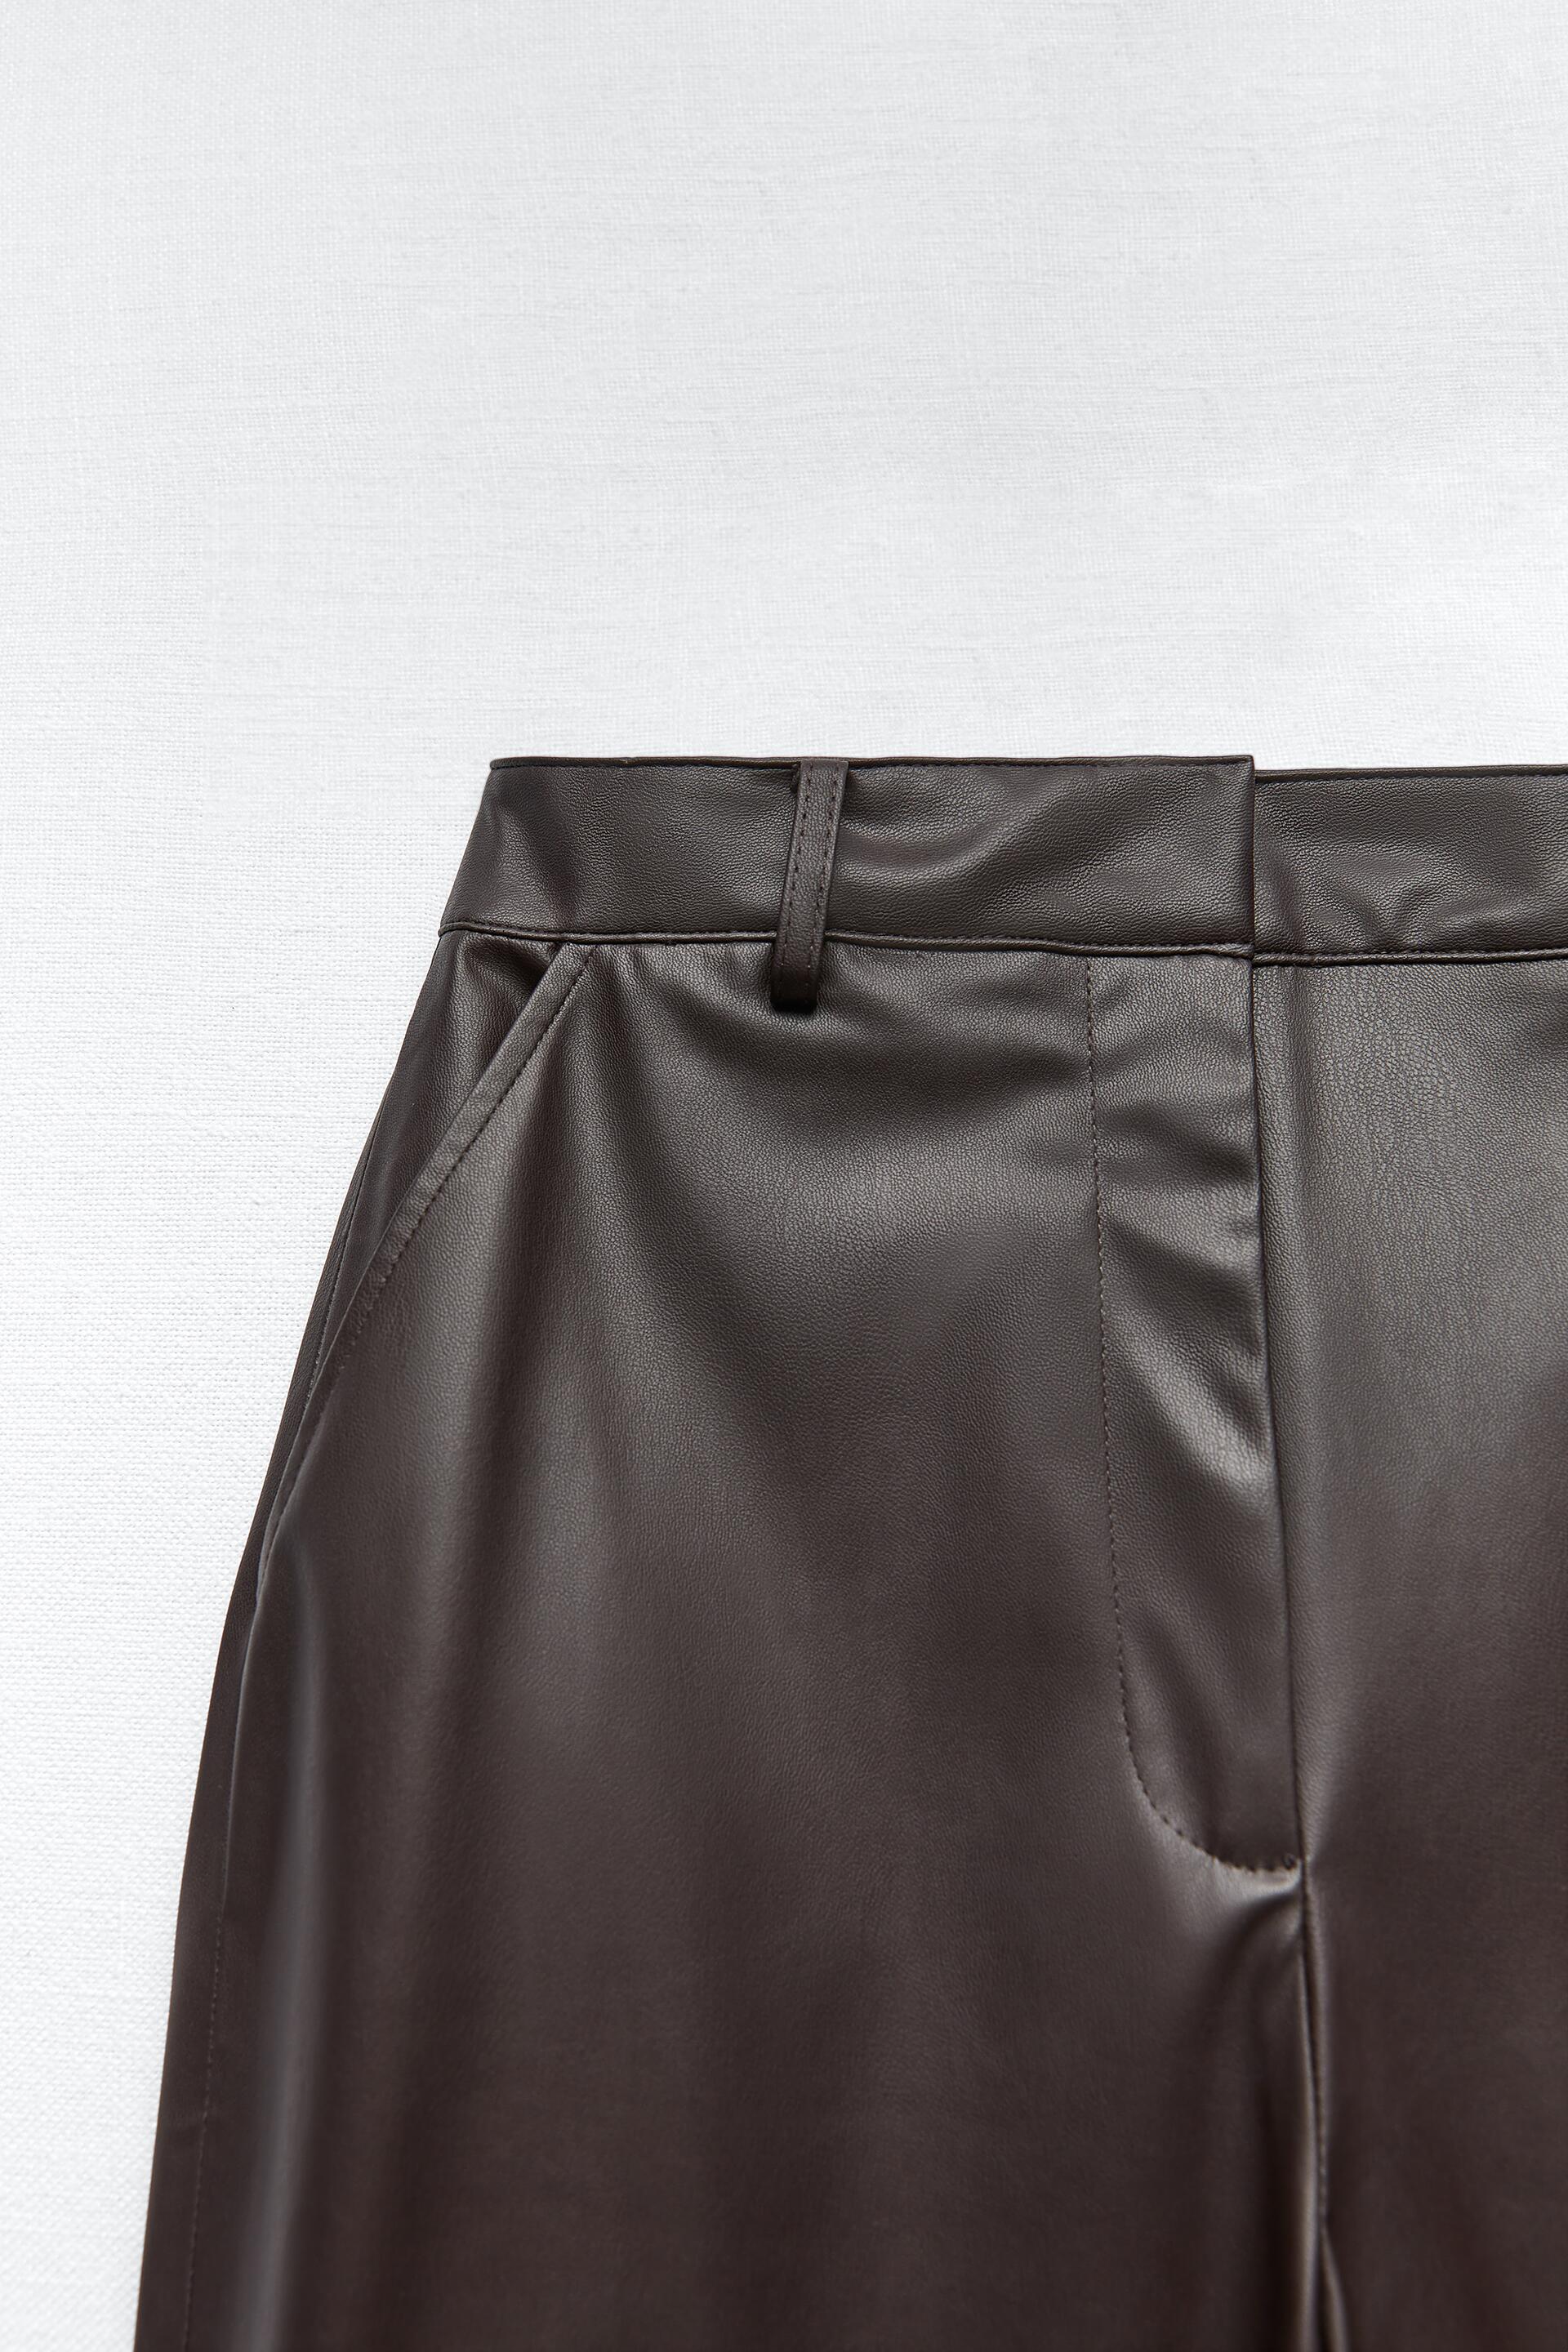 Zara Pleated Faux Leather Pants - Big Apple Buddy